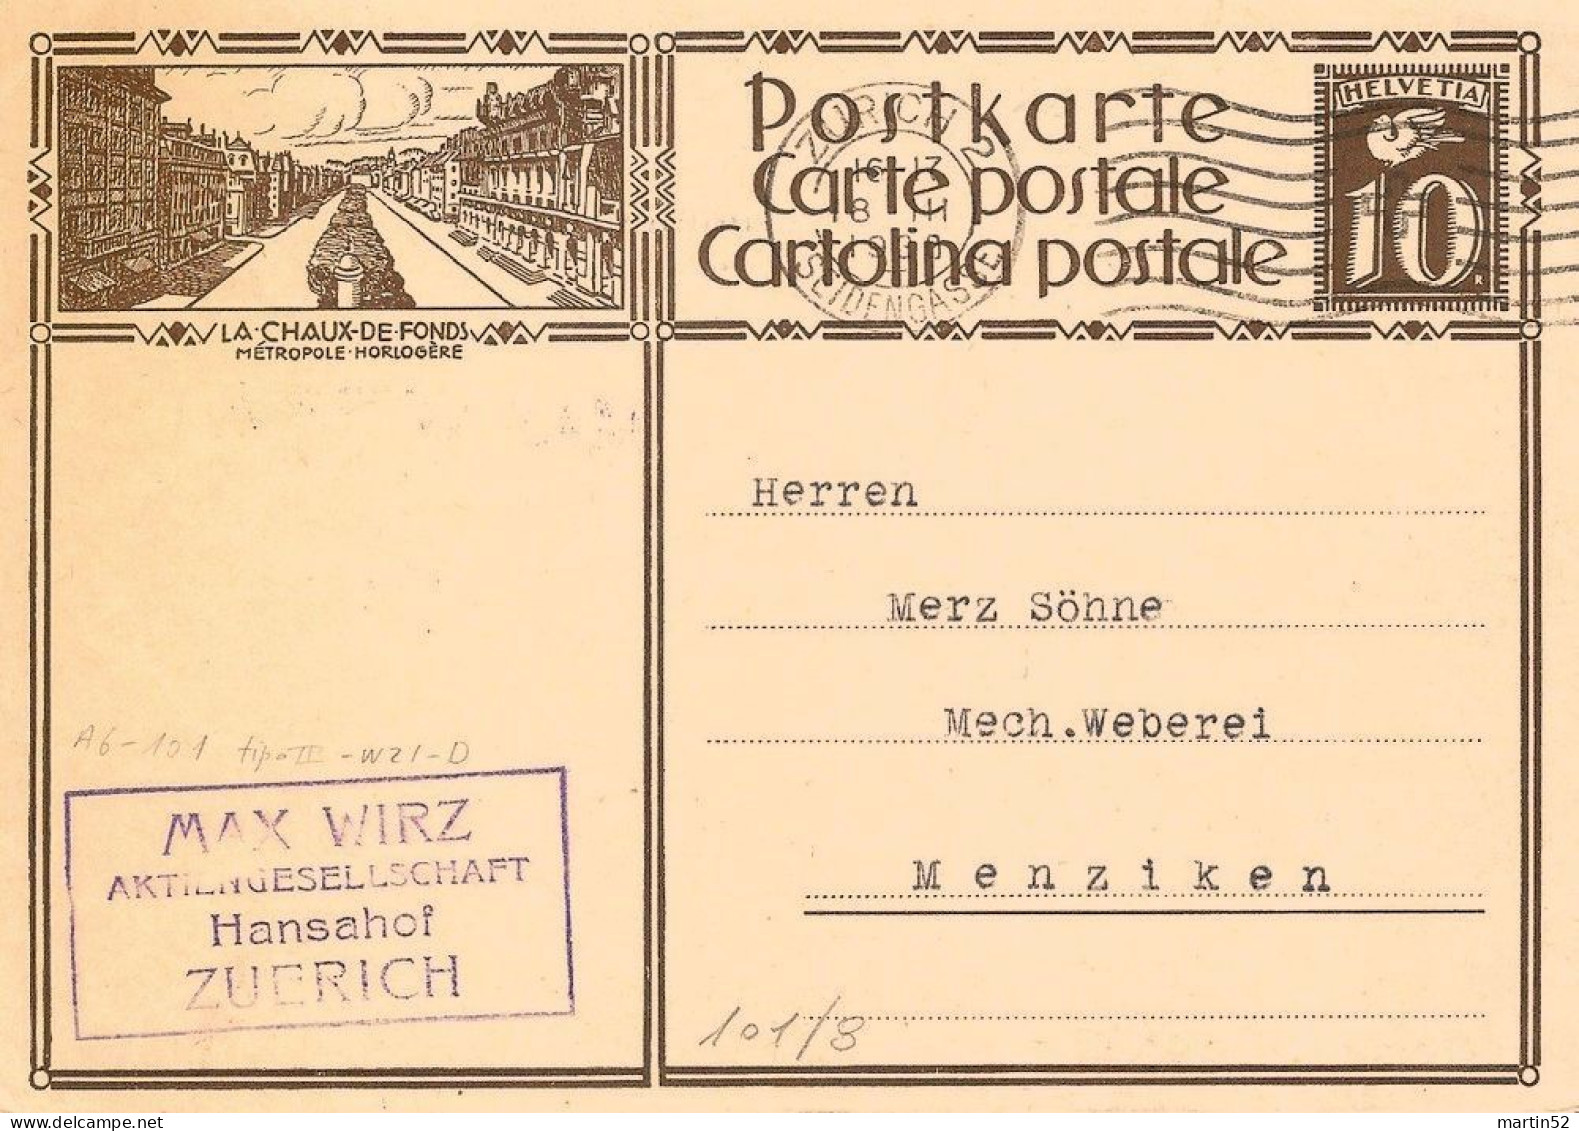 Schweiz Suisse 1930: Bild-PK CPI  LA CHAUX-DE-FONDS MÉTROPOLE HORLOGÈRE Mit Stempel ZÜRICH 18.III.1930 - Horloges